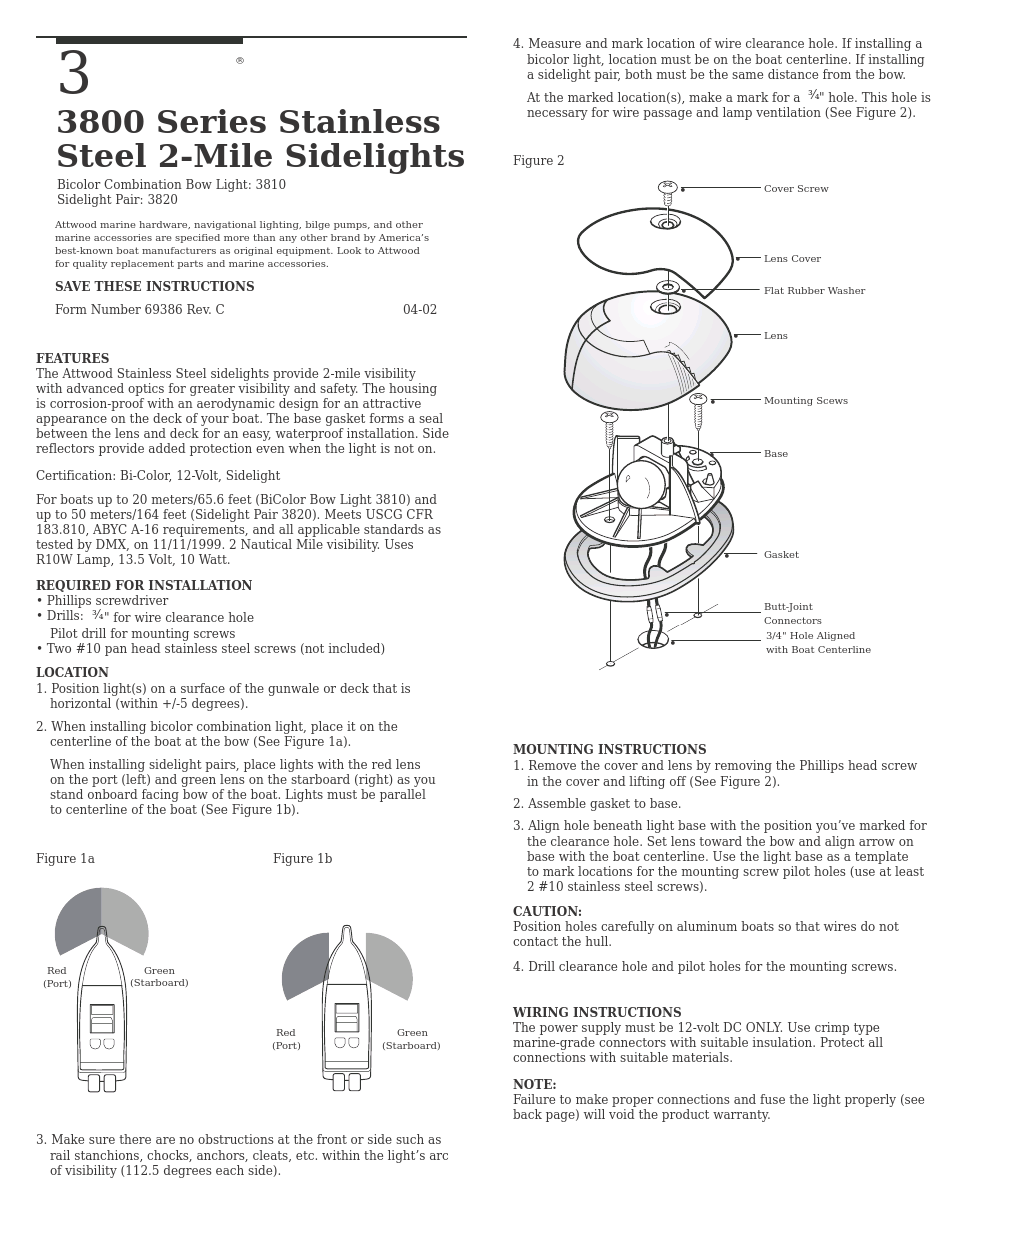 3800 Series Stainless Steel 2-Mile Sidelights